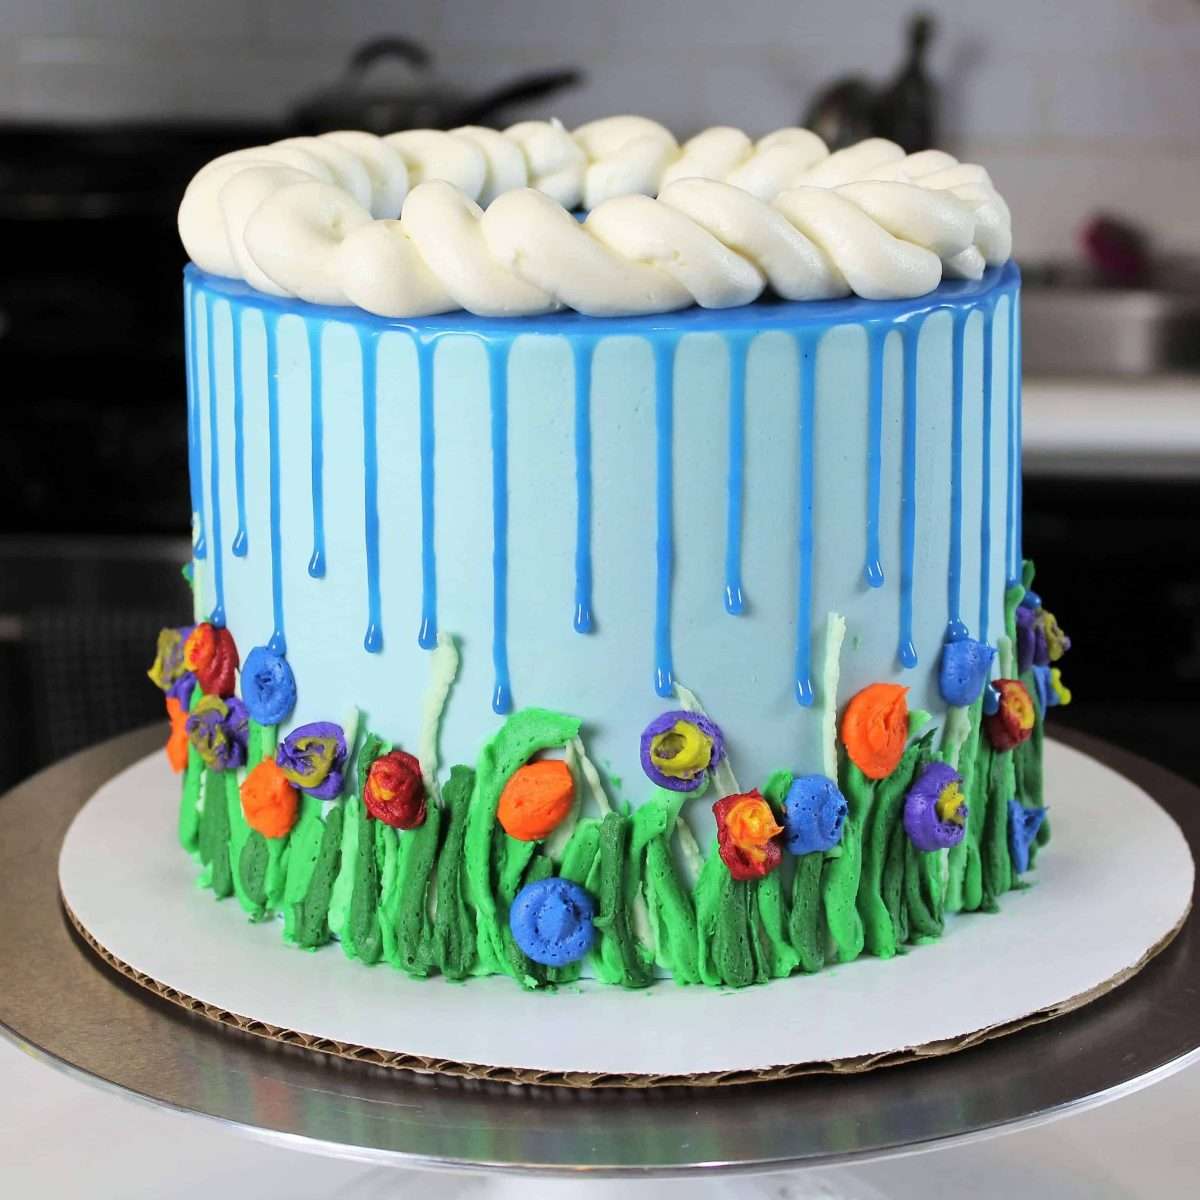 The Ultimate Spring Cake Design: April Showers Cake